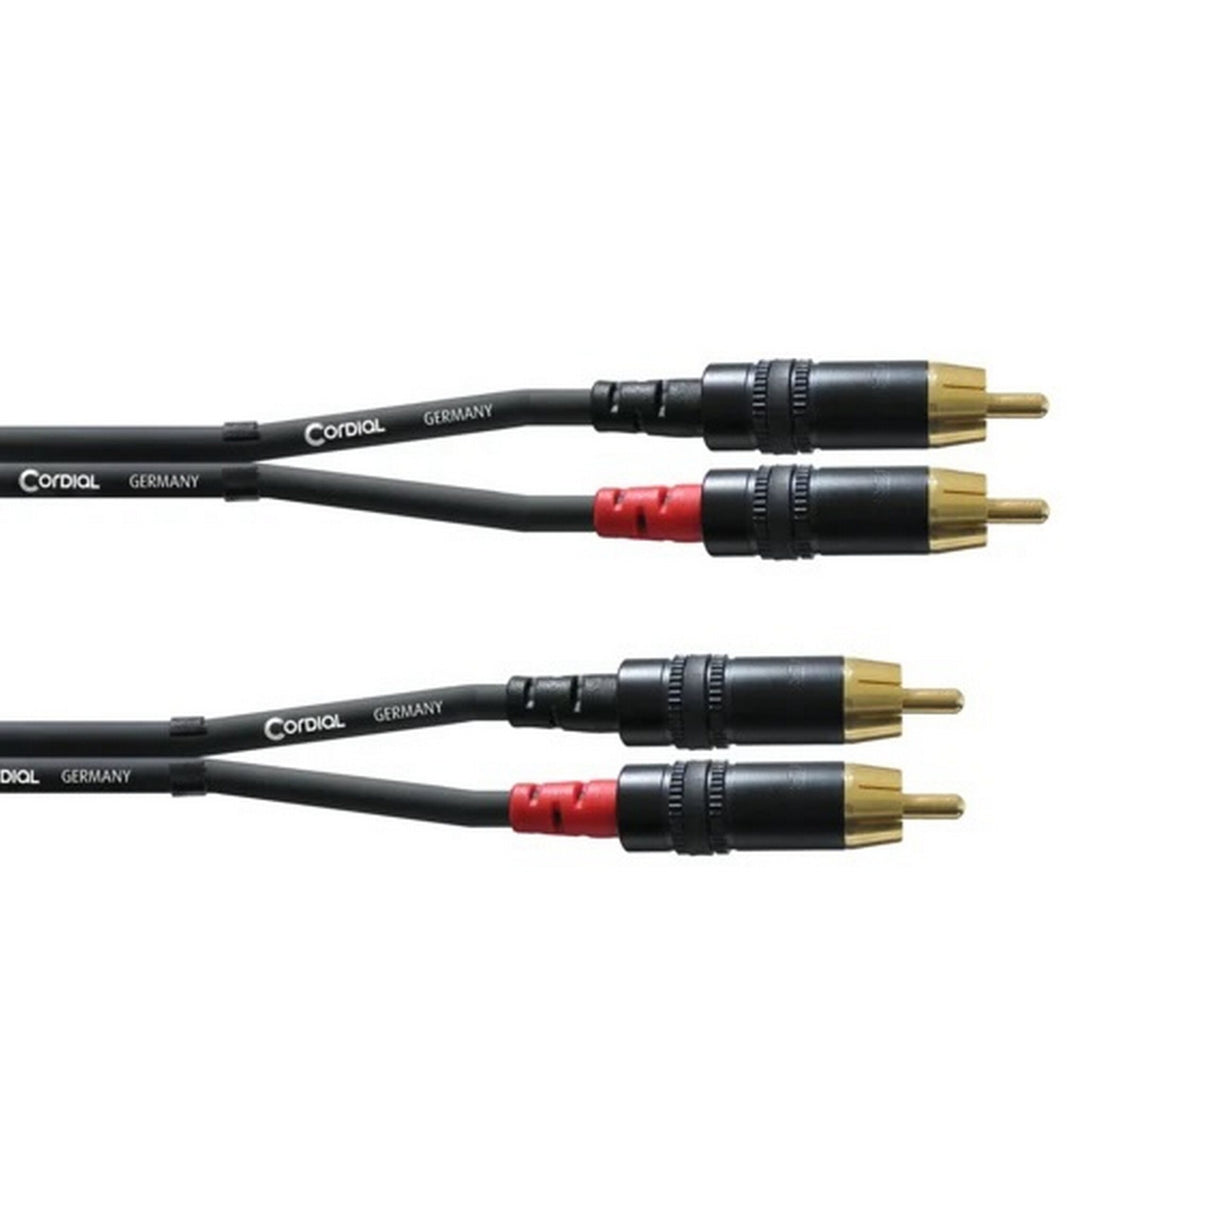 Cordial CFU 0.9 CC 2 x RCA to 2 x RCA Twin Cable/Adapter, Black, 3-Feet